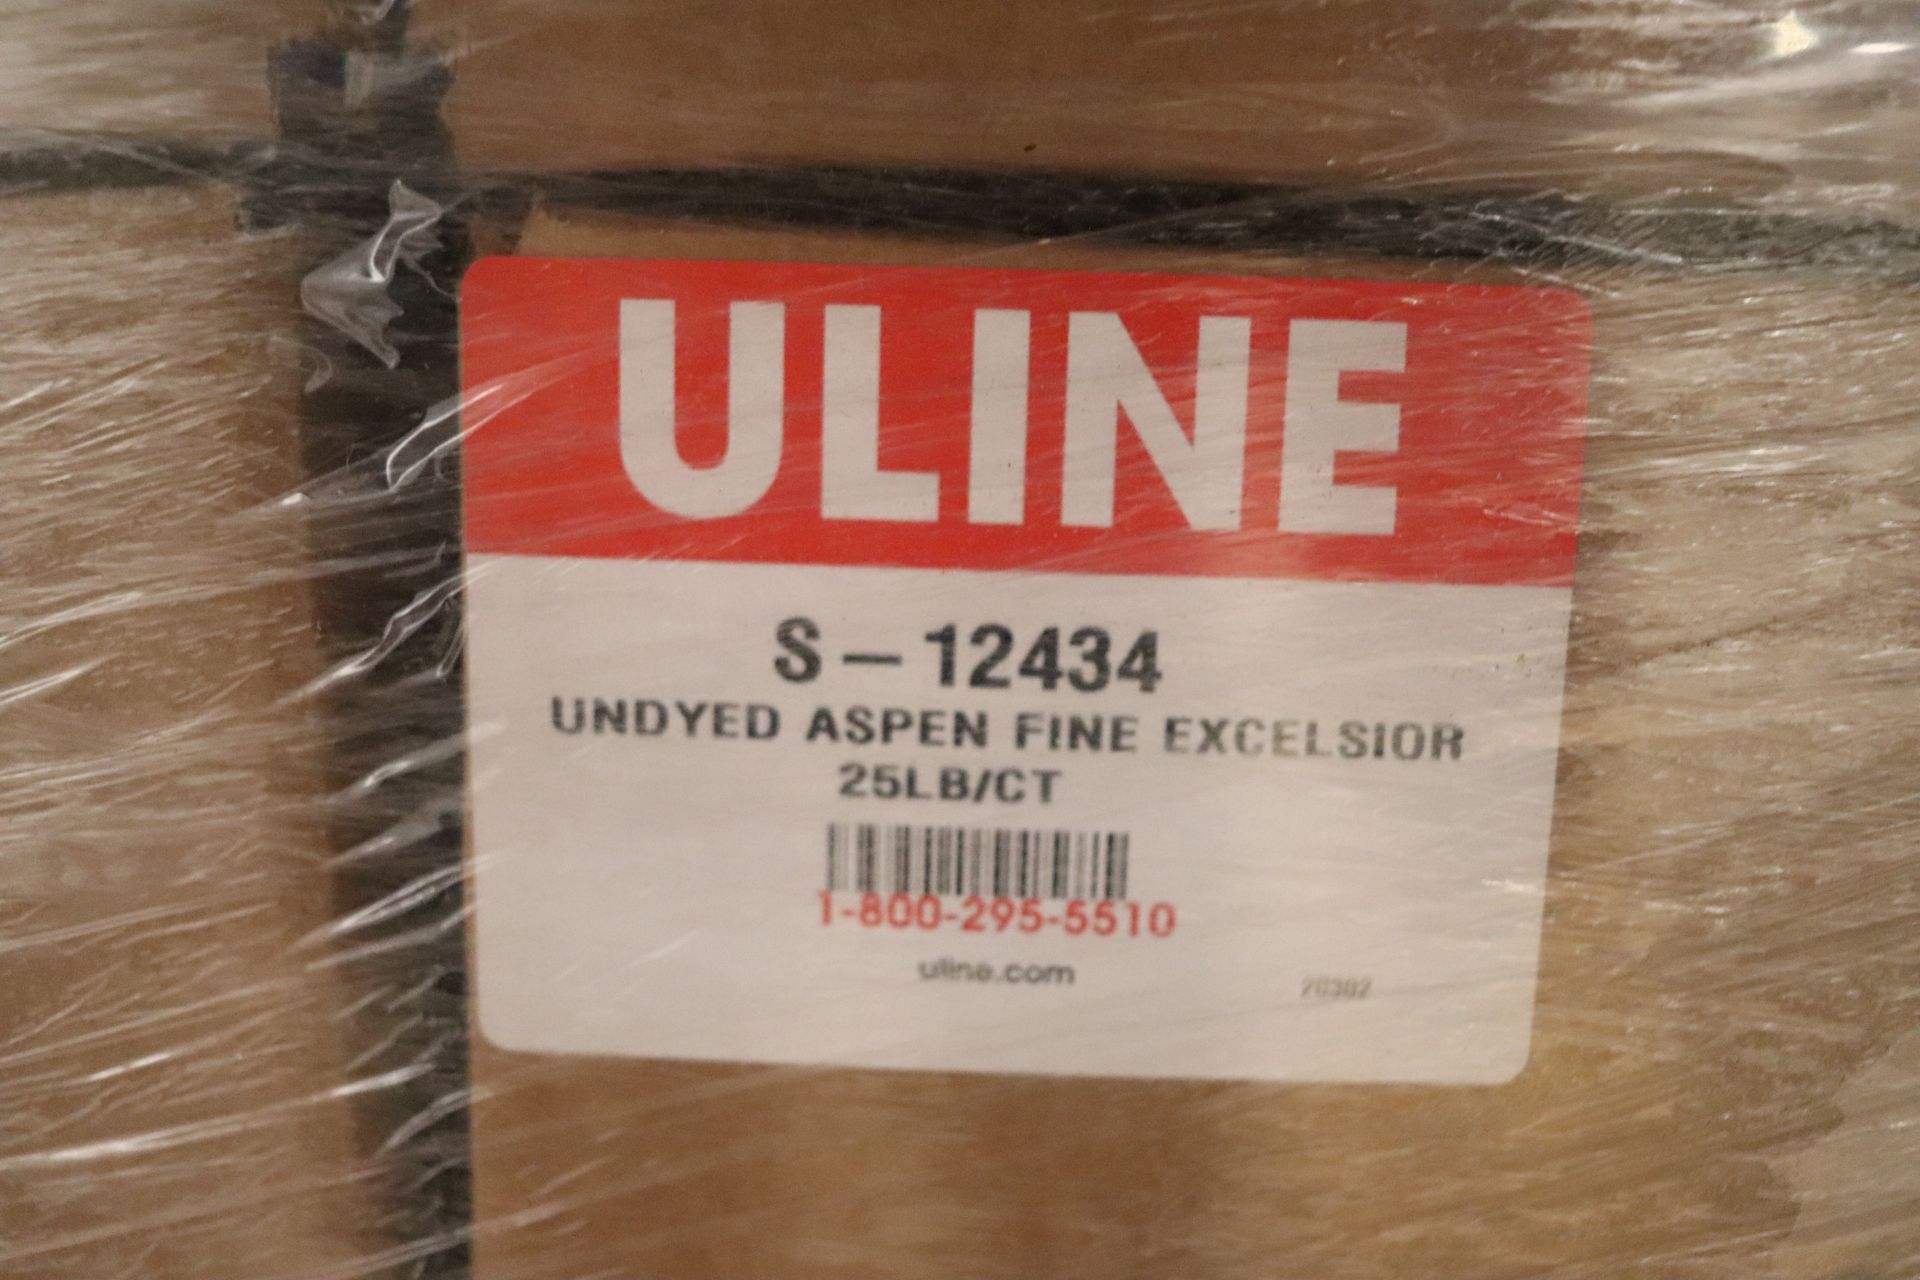 Twelve cases of Uline undyed Aspen Fine Excelsior packing material, model S-12434 - Image 3 of 3